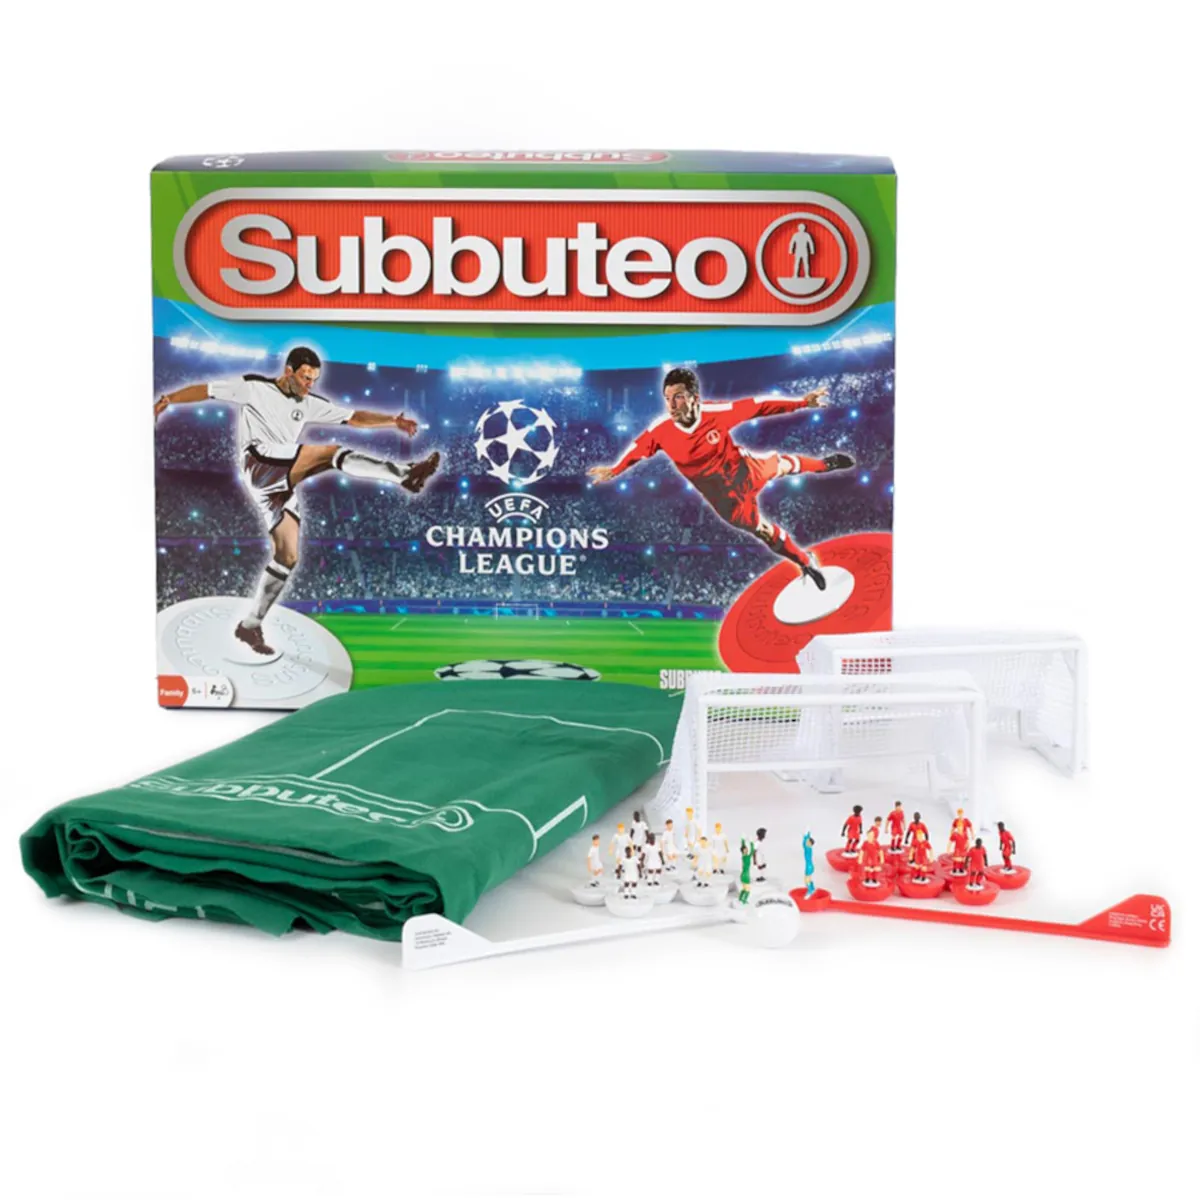 TM-05276 UEFA Champions League Edition Subbuteo Main Table Football Game